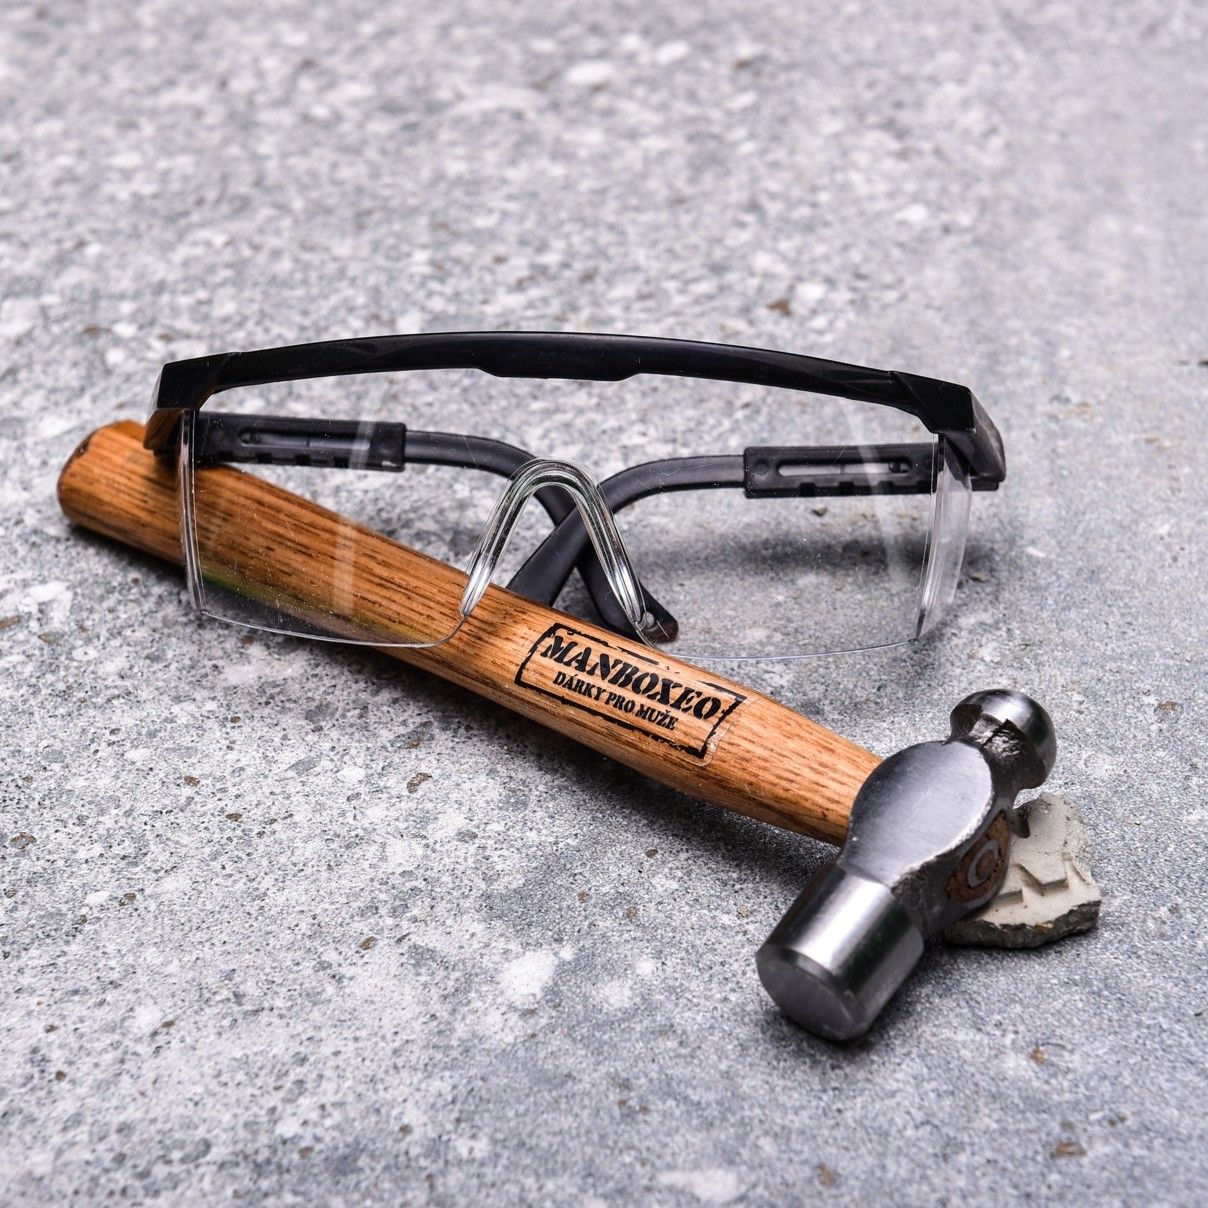 Manboxeo kladivo a ochranné brýle - darek pro muze.jpg